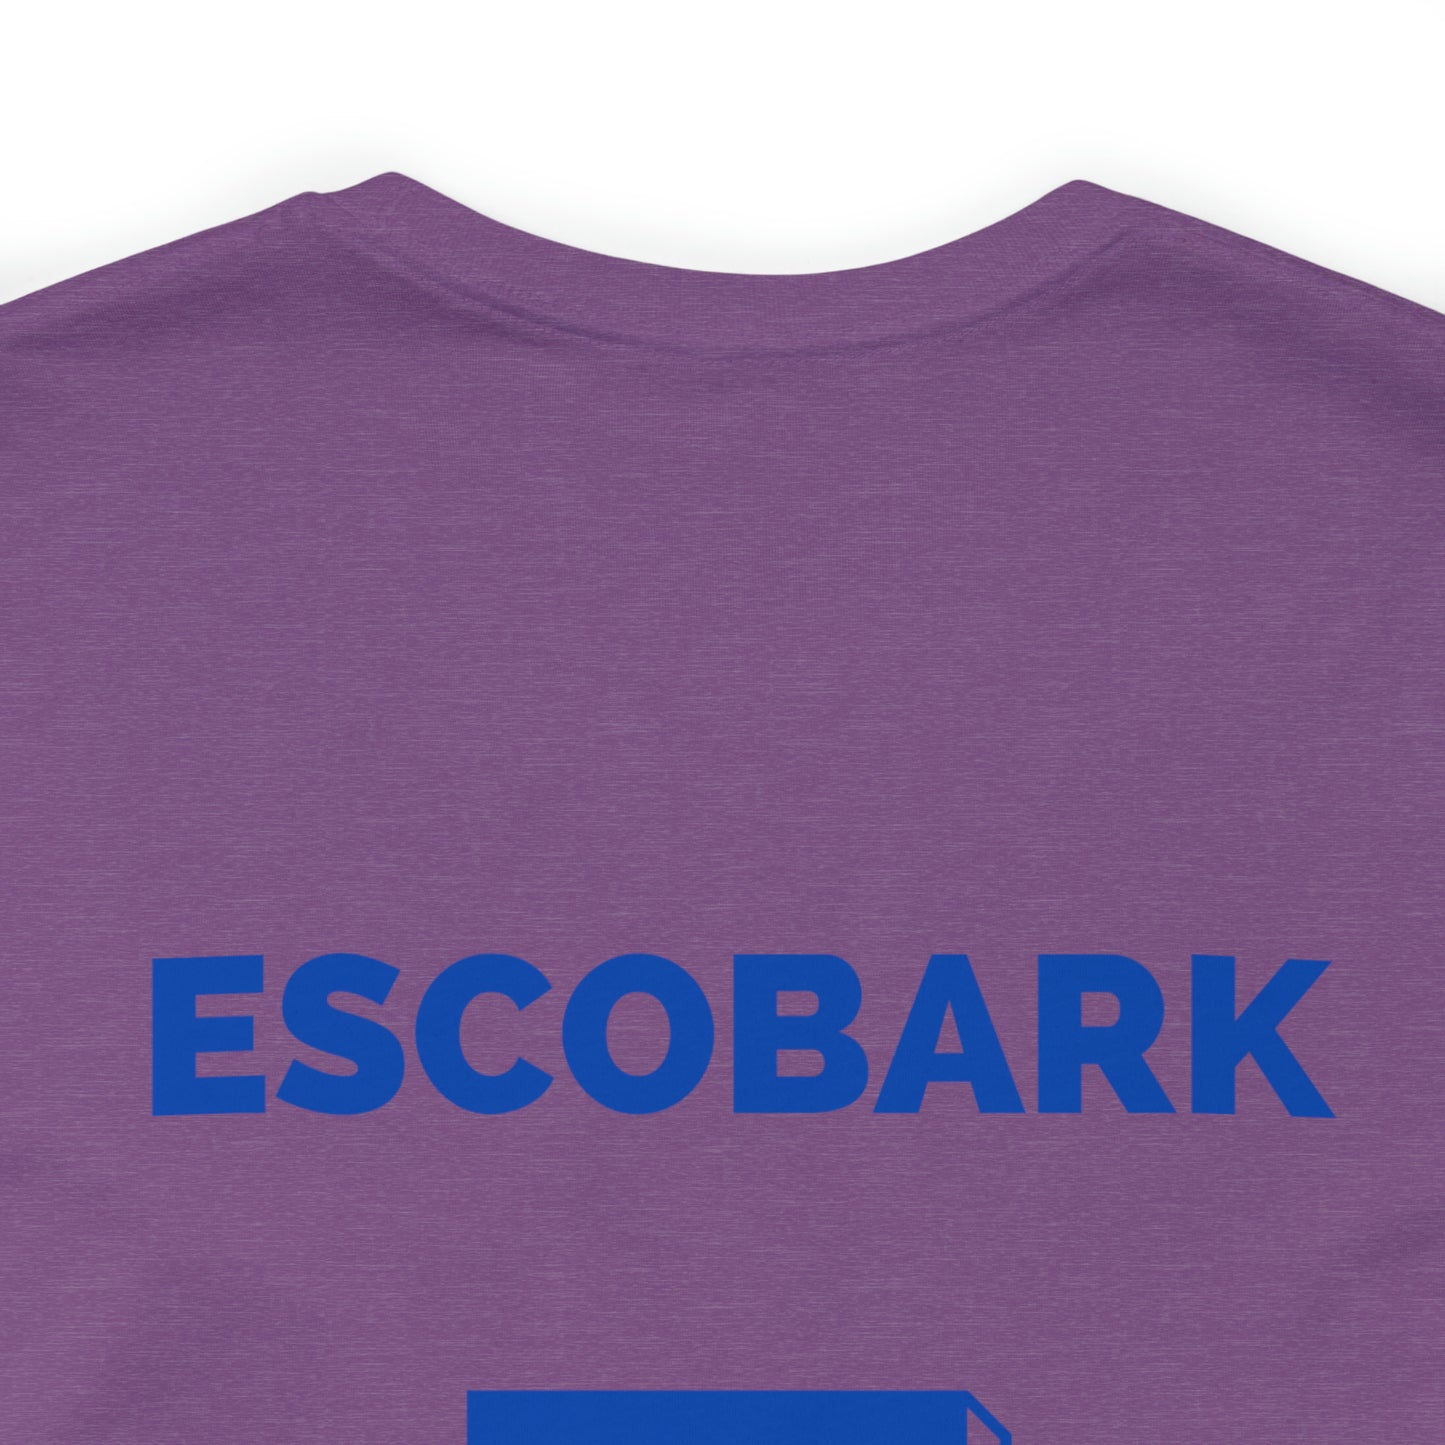 Escobark